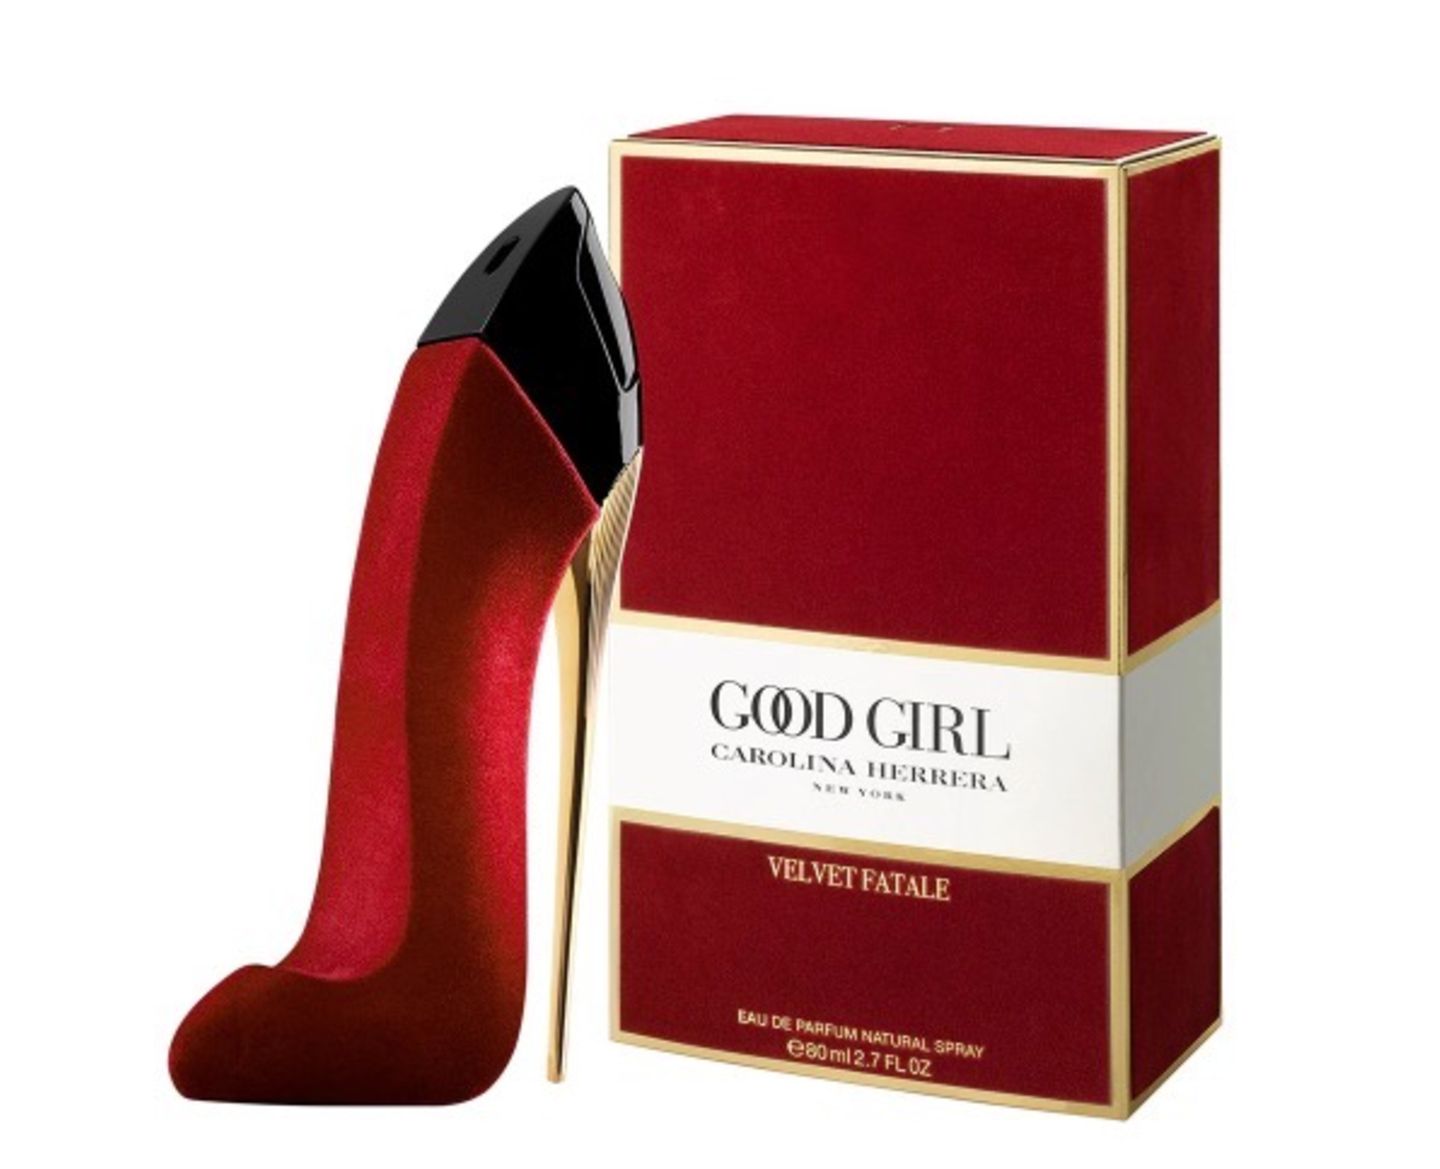 Neu in den Shops: Carolina Herrera Good Girl Velvet Fatale X-Mas Collector Eau de Parfum